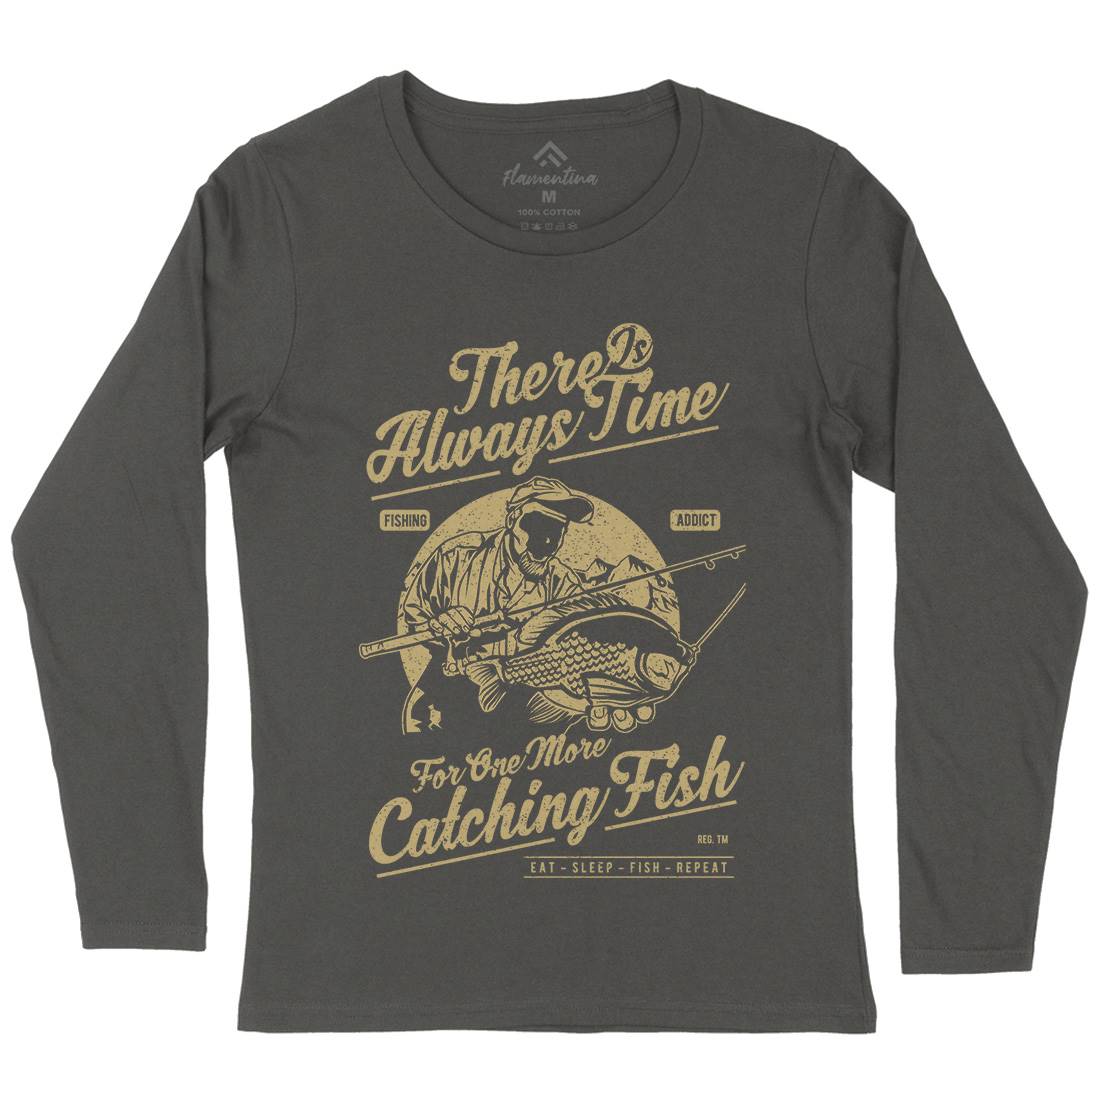 One More Catching Womens Long Sleeve T-Shirt Fishing A731